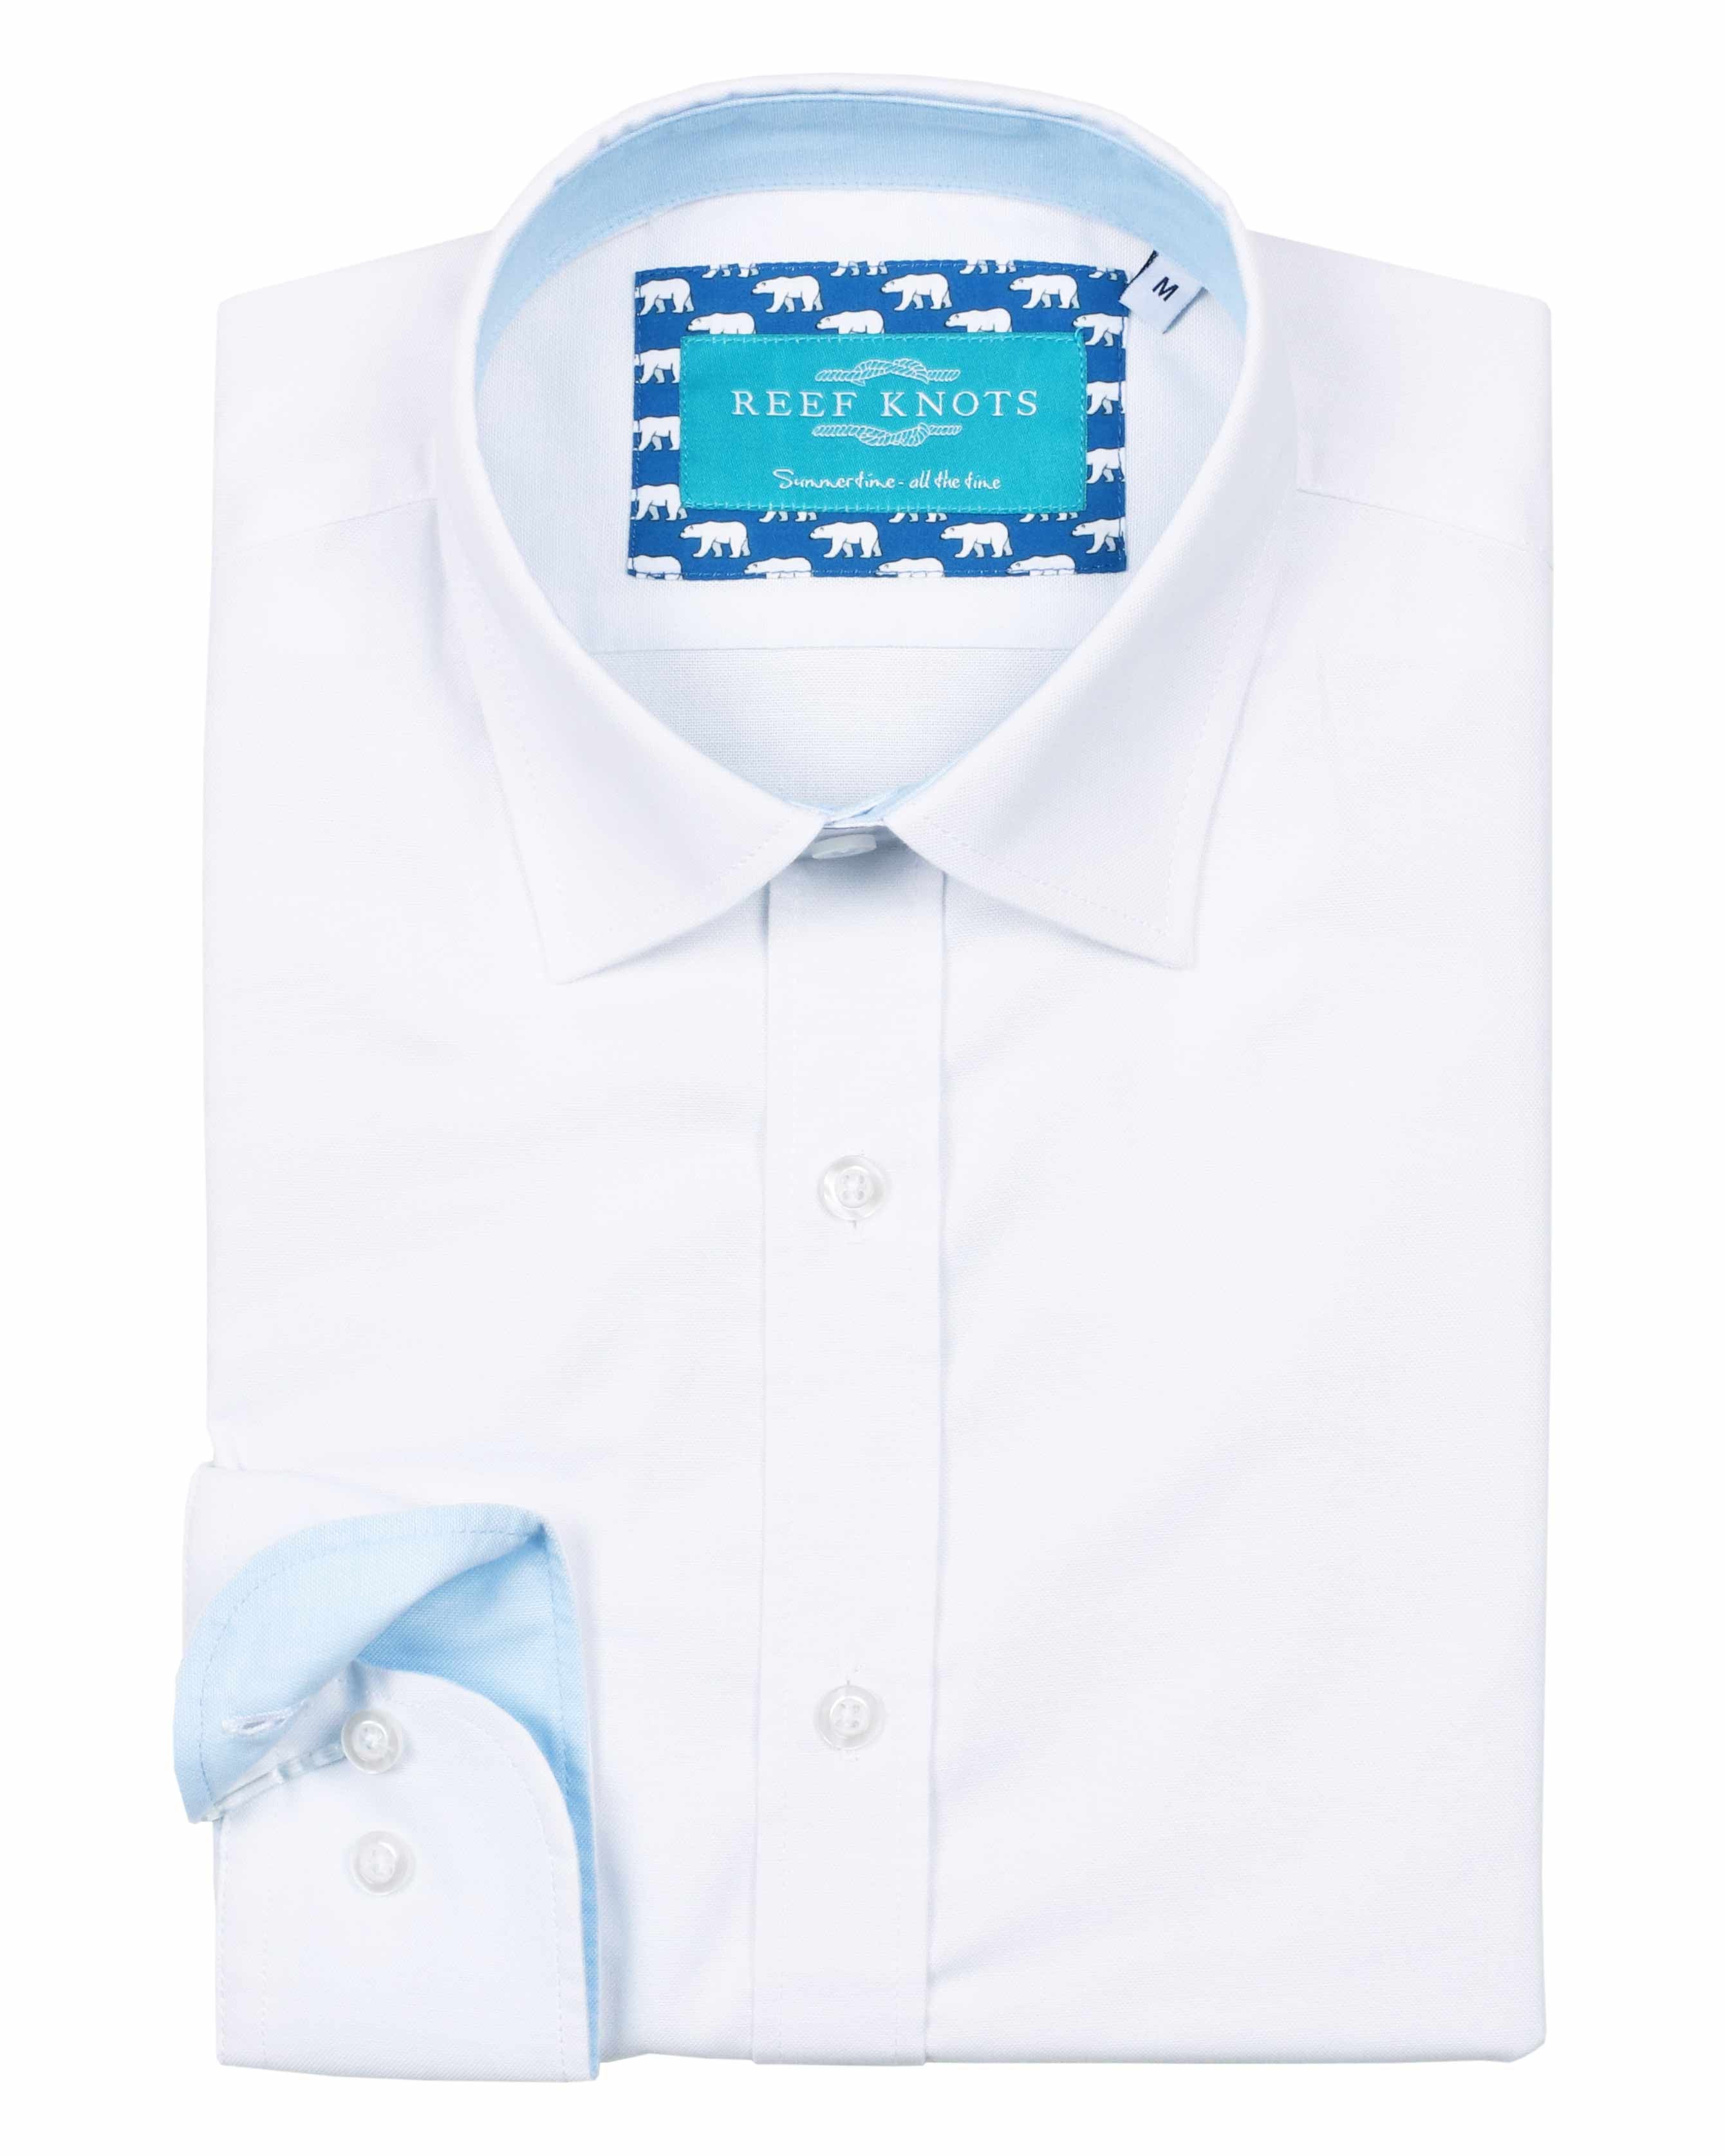 White Oxford Shirt - Traditional Collar Shirts